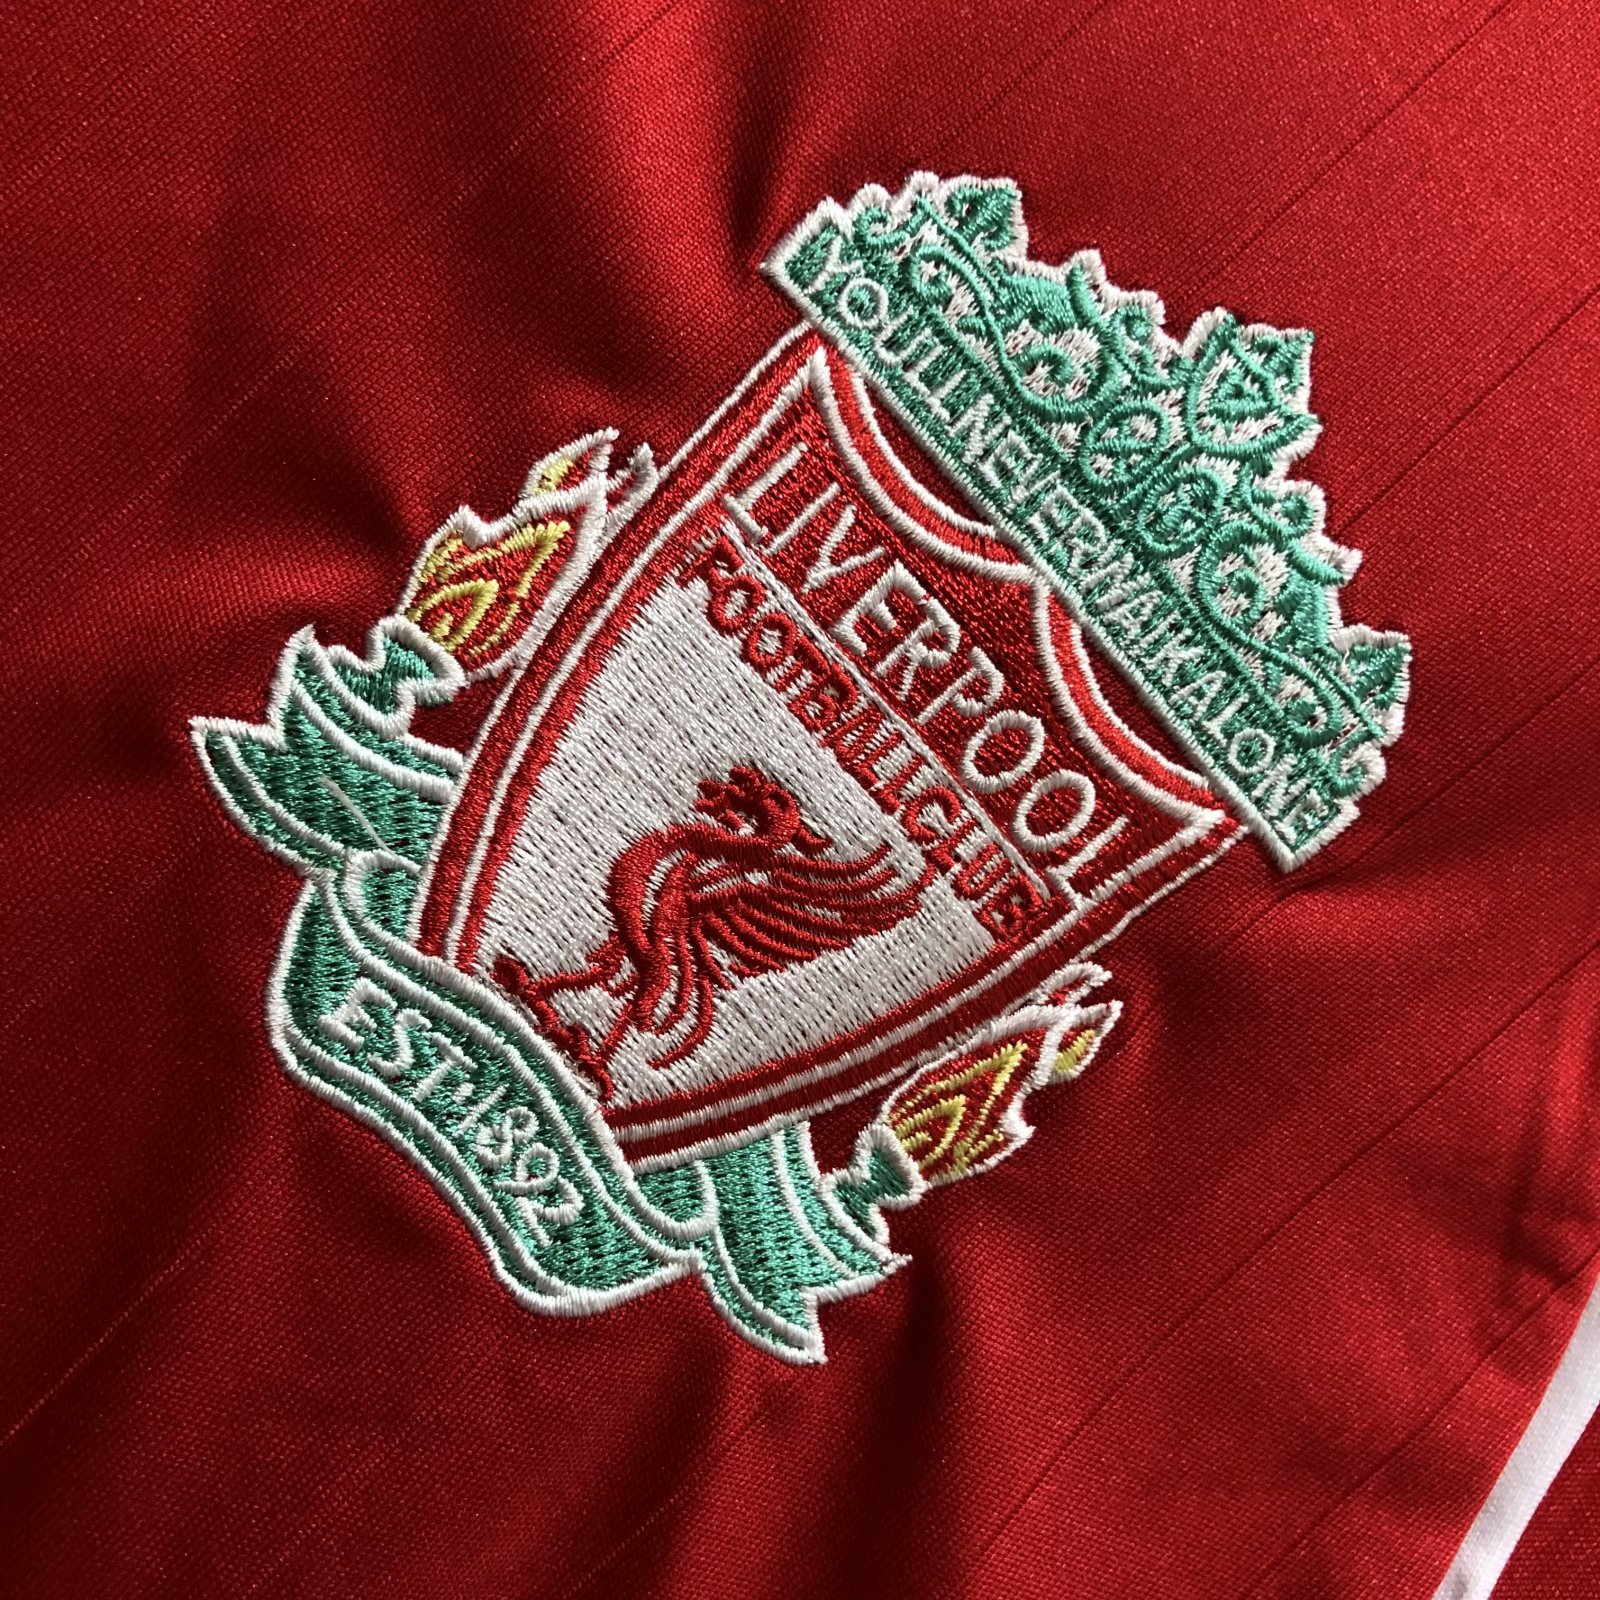 Liverpool Soccer Jersey Replica Retro Home Mens 2006-2008 